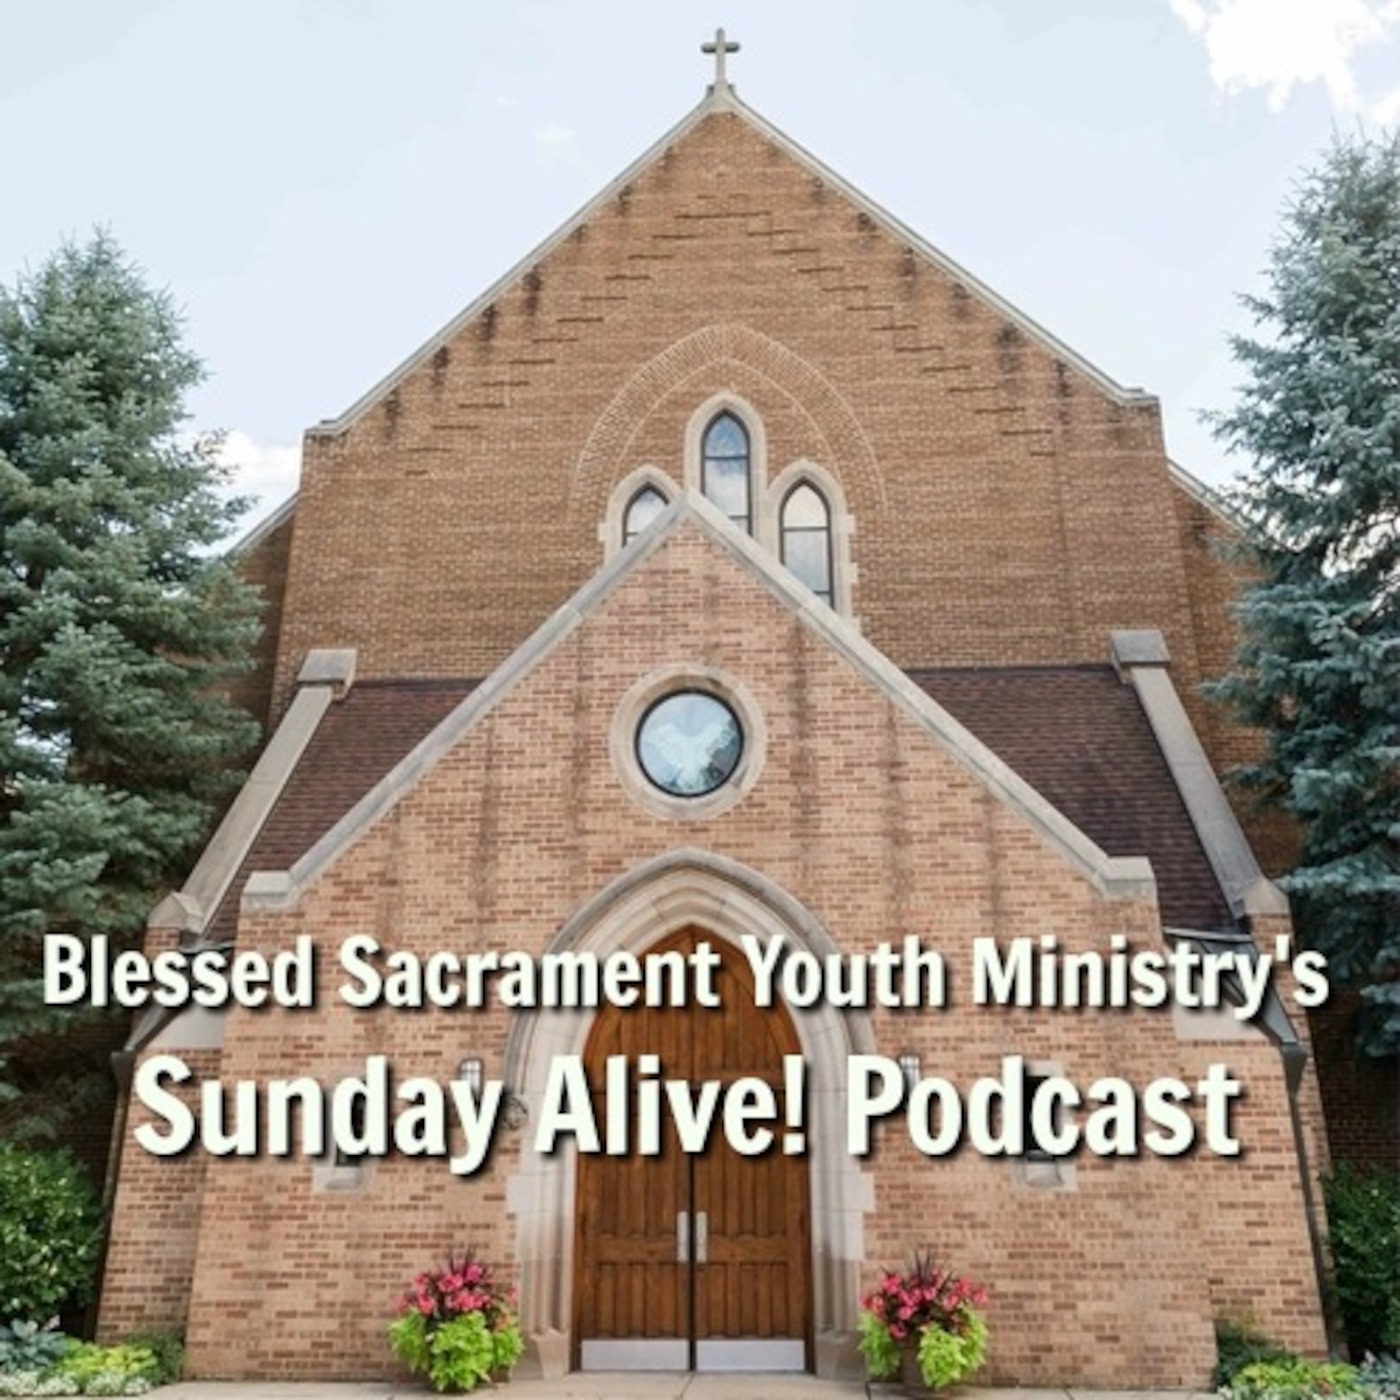 The Sunday Alive Podcast - Sunday, February 9, 2020 - the Fifth Sunday of Ordinary Time